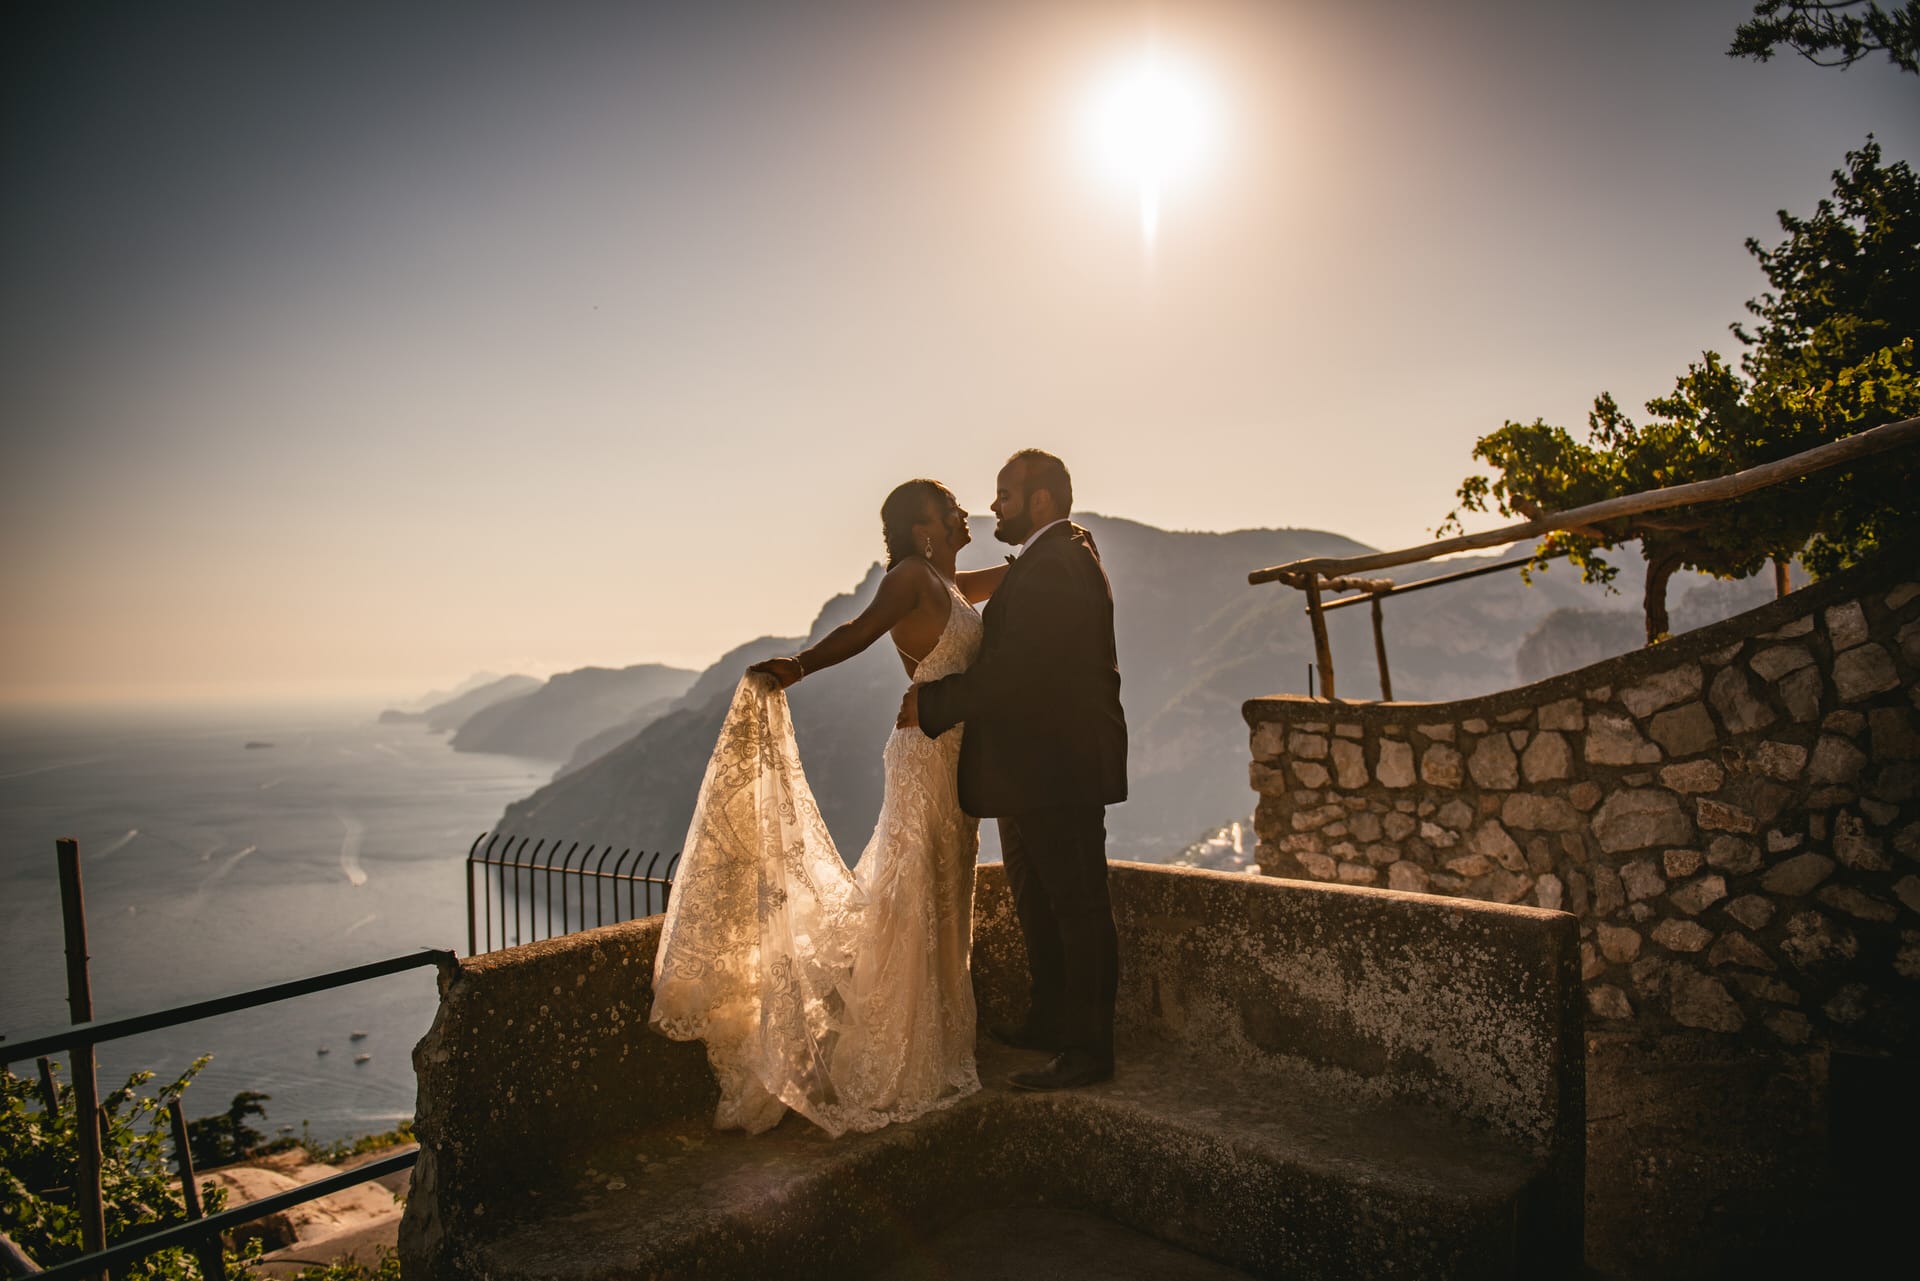 Couple photoshoot on the Path of Gods - Sentieri degli dei during their elopement on the amalfi Coast